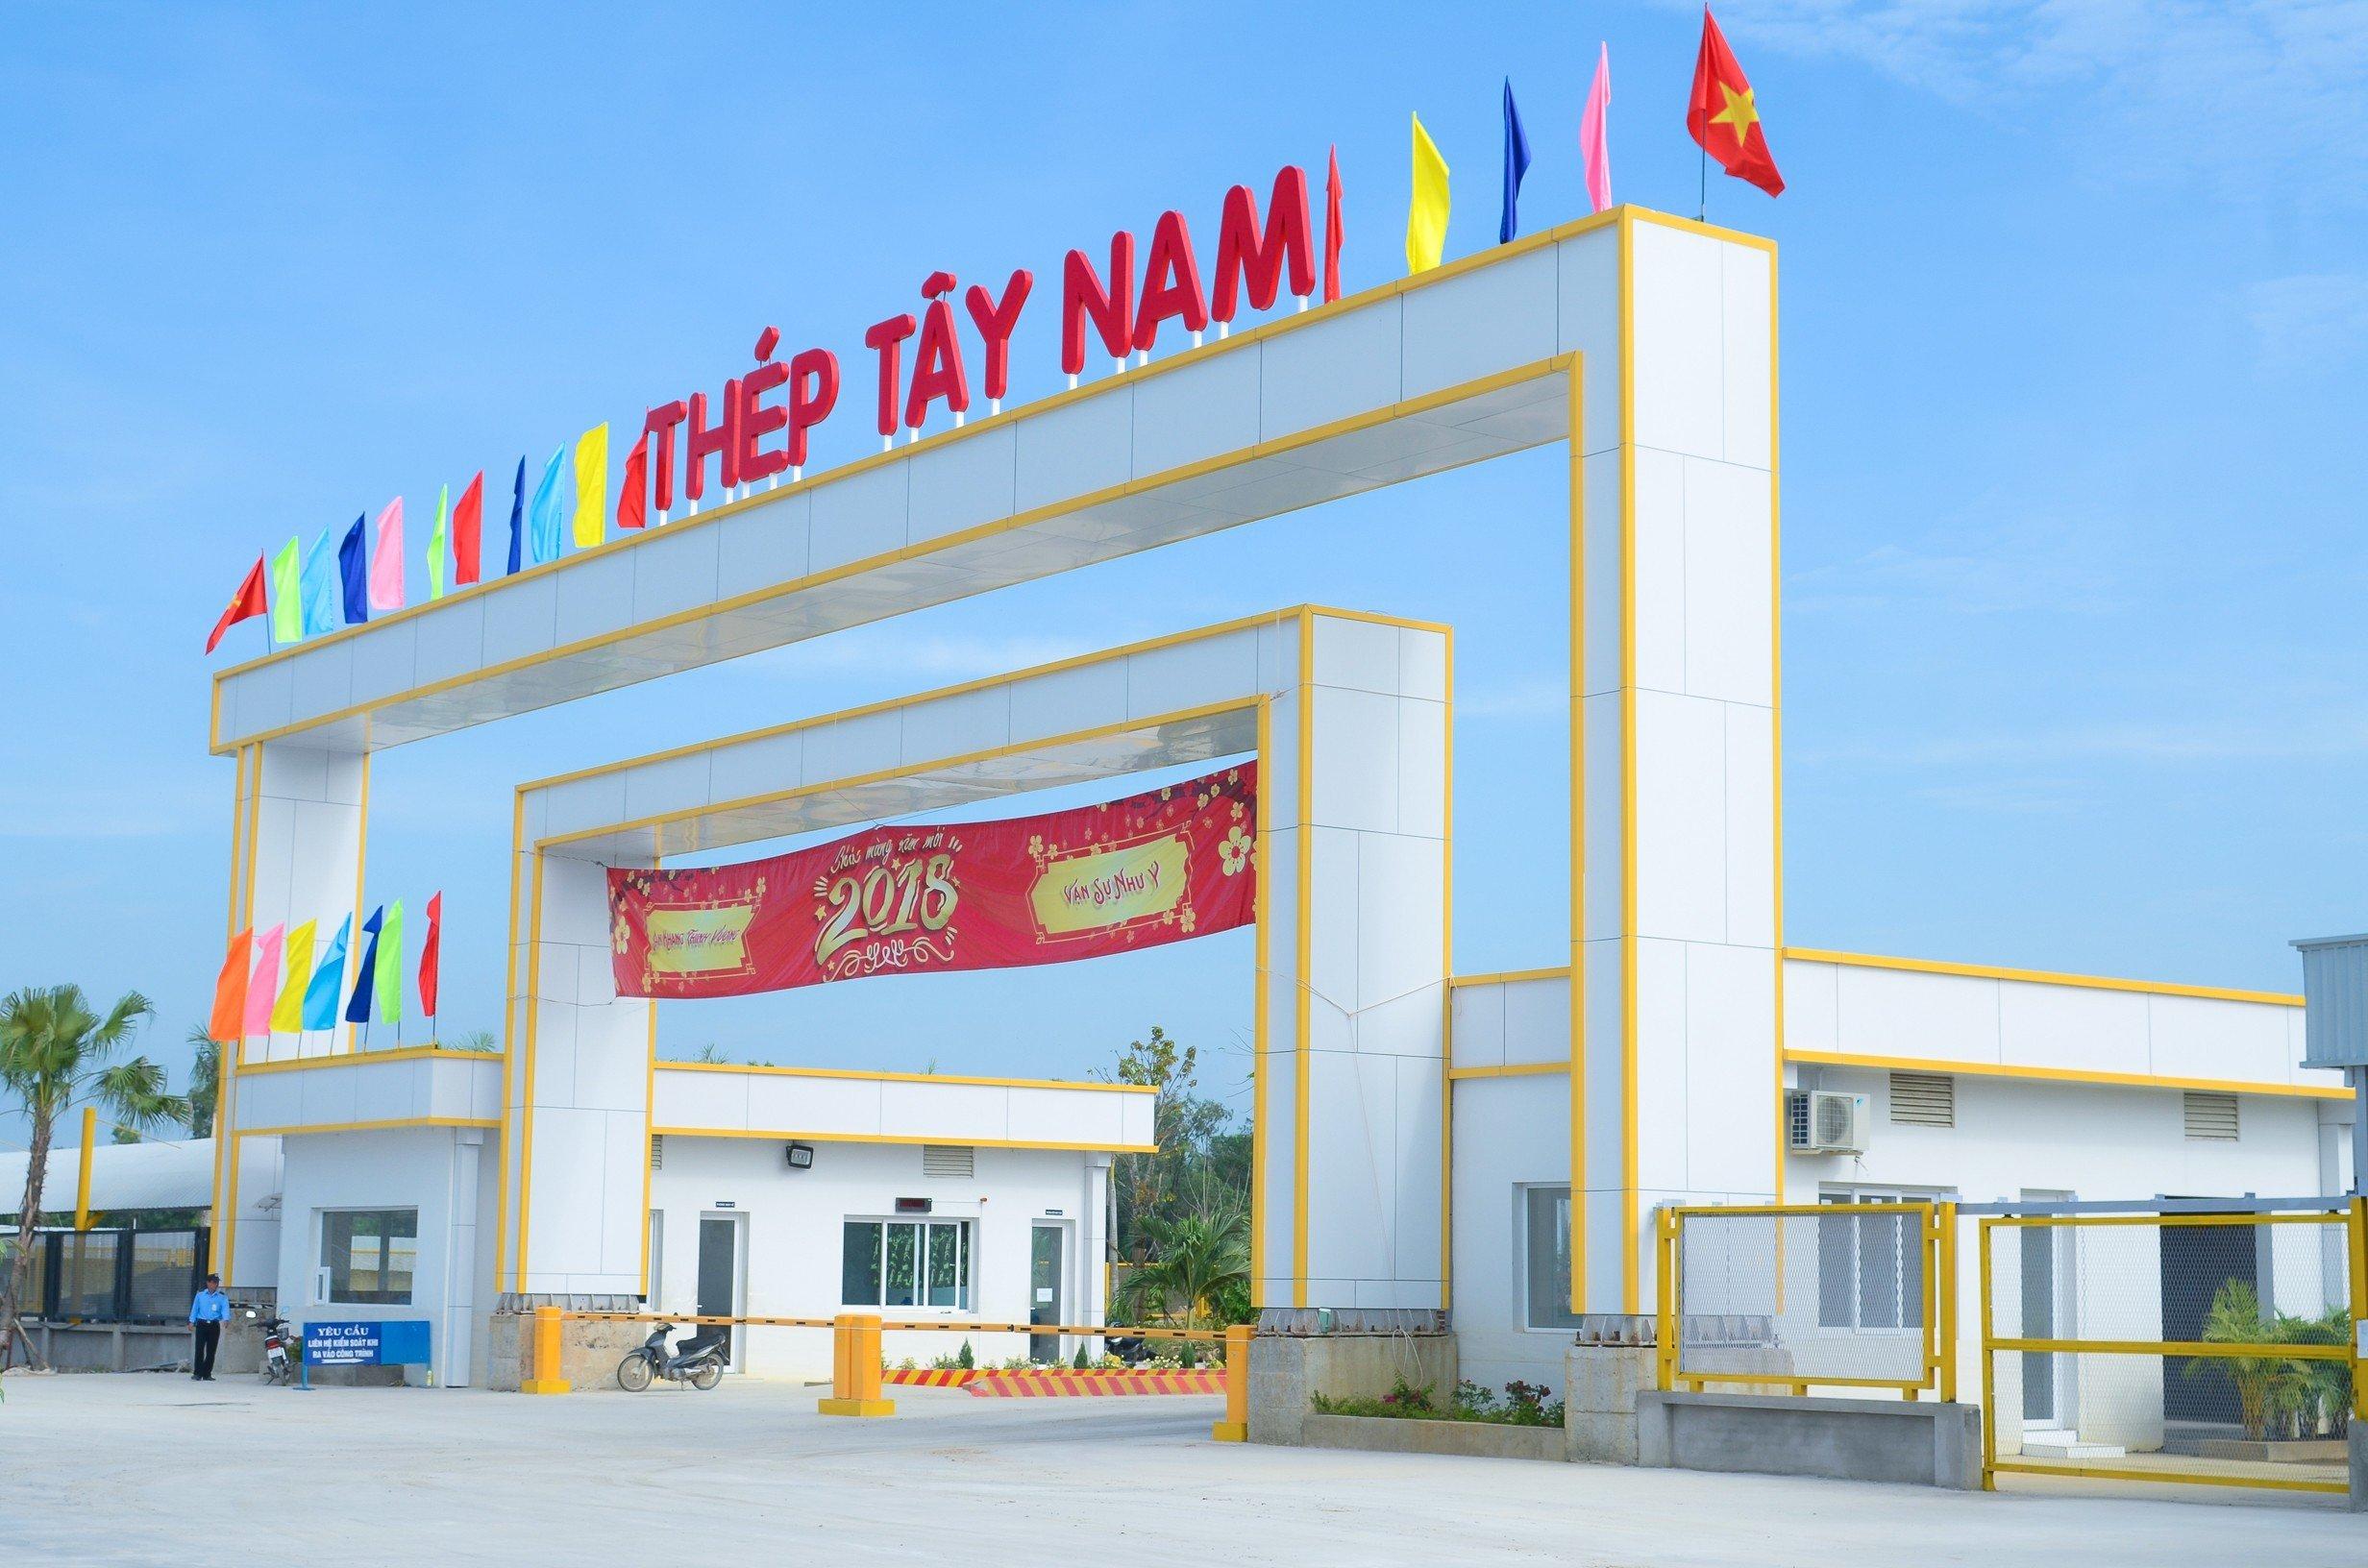 Latest Công Ty TNHH SX & TM Thép Tây Nam employment/hiring with high salary & attractive benefits